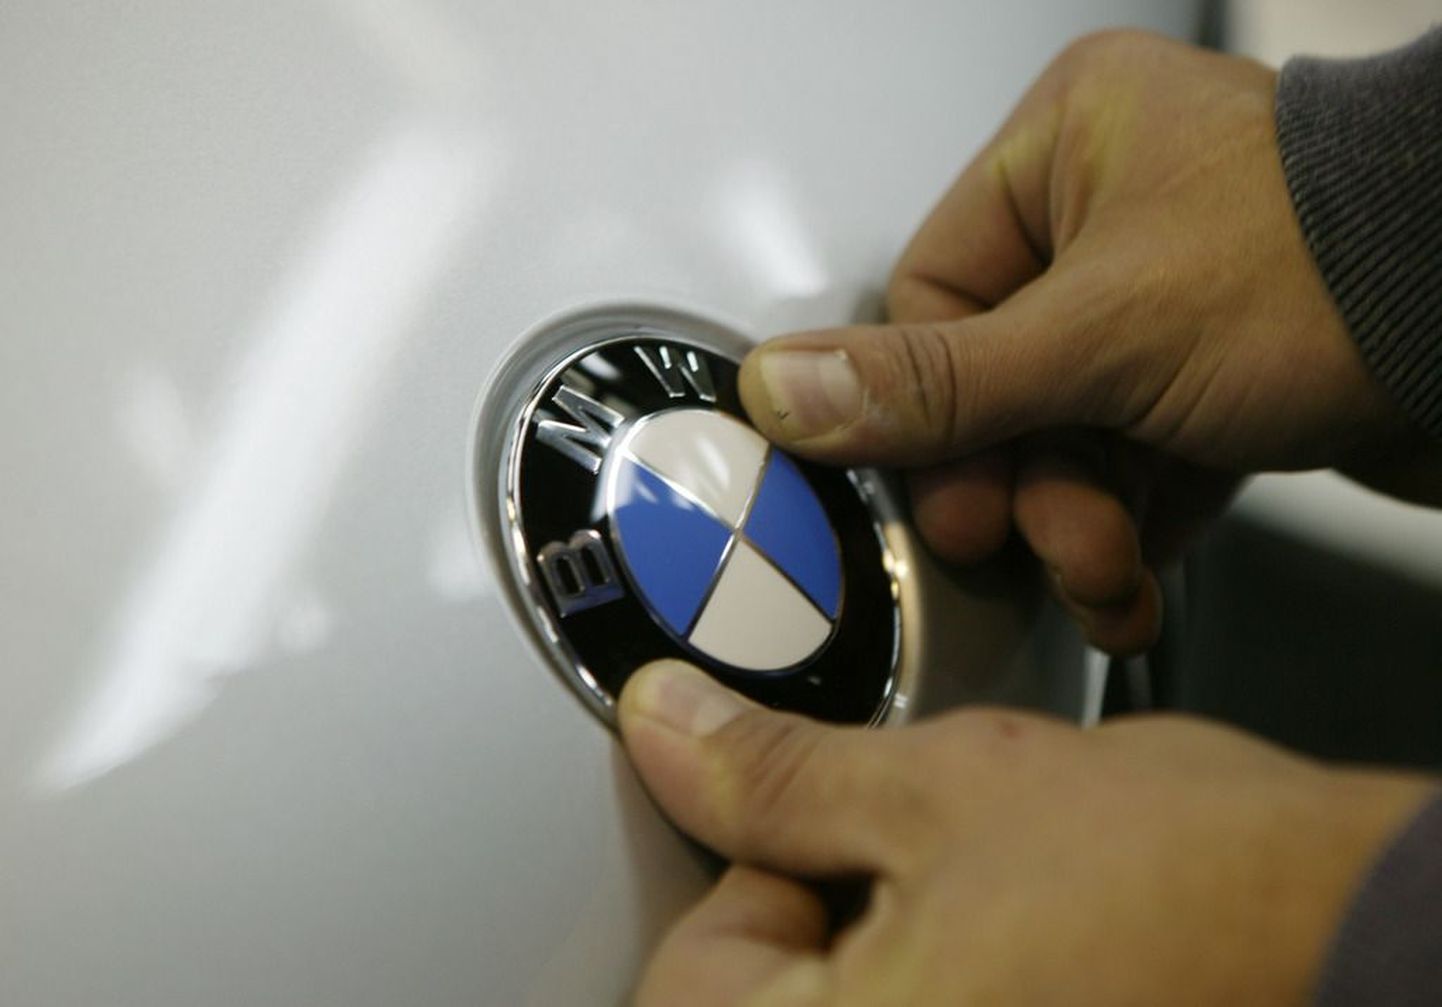 BMW logo.